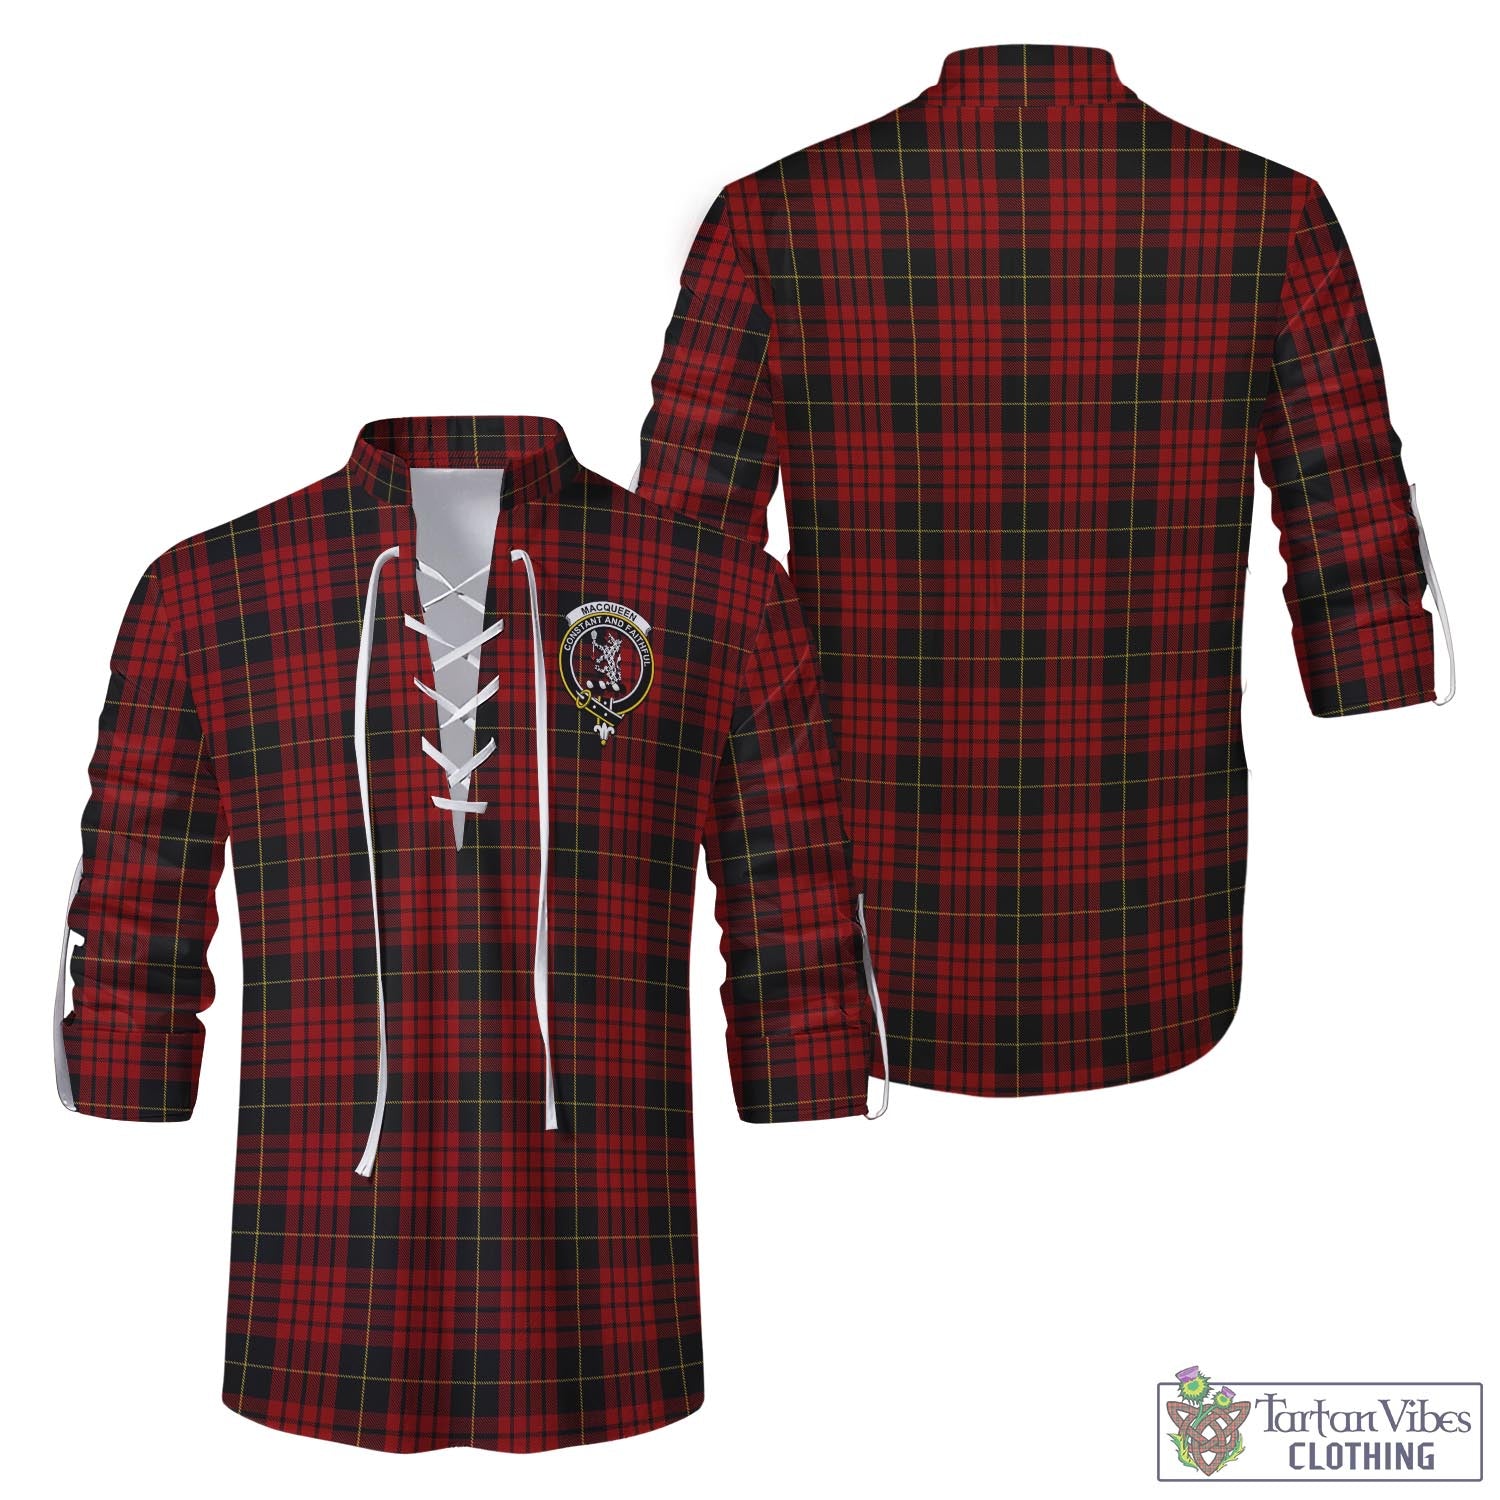 Tartan Vibes Clothing MacQueen Tartan Men's Scottish Traditional Jacobite Ghillie Kilt Shirt with Family Crest